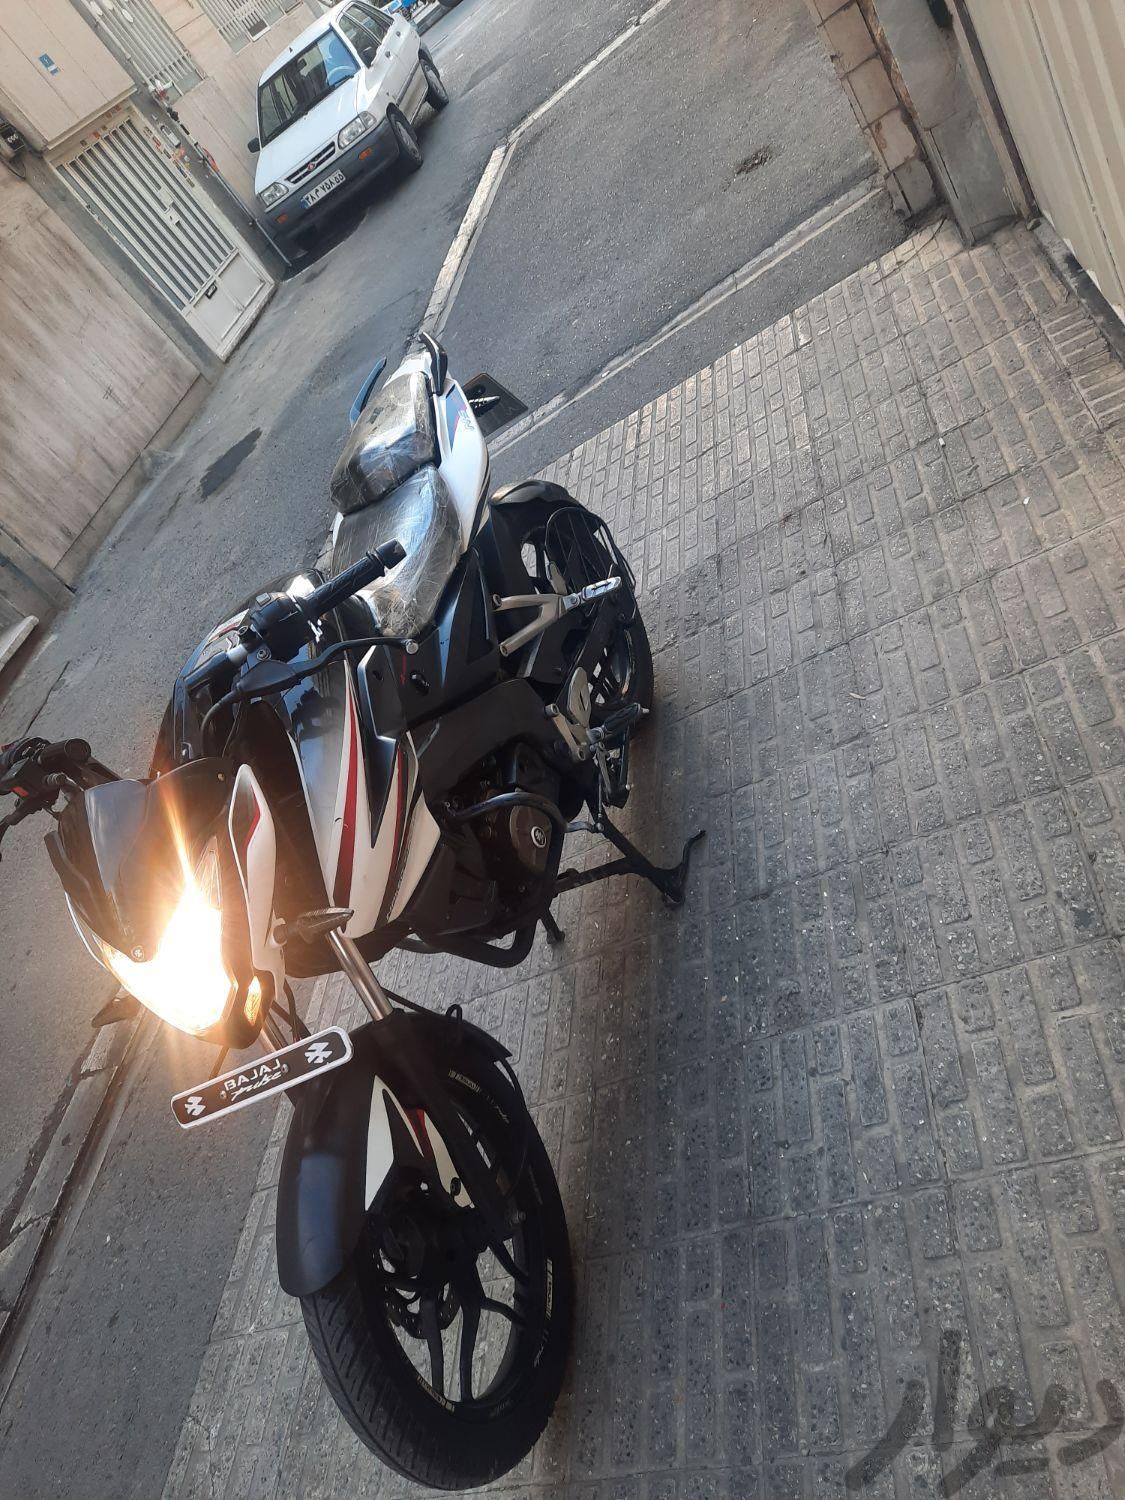 ns150|موتورسیکلت|تهران, هاشمی|دیوار